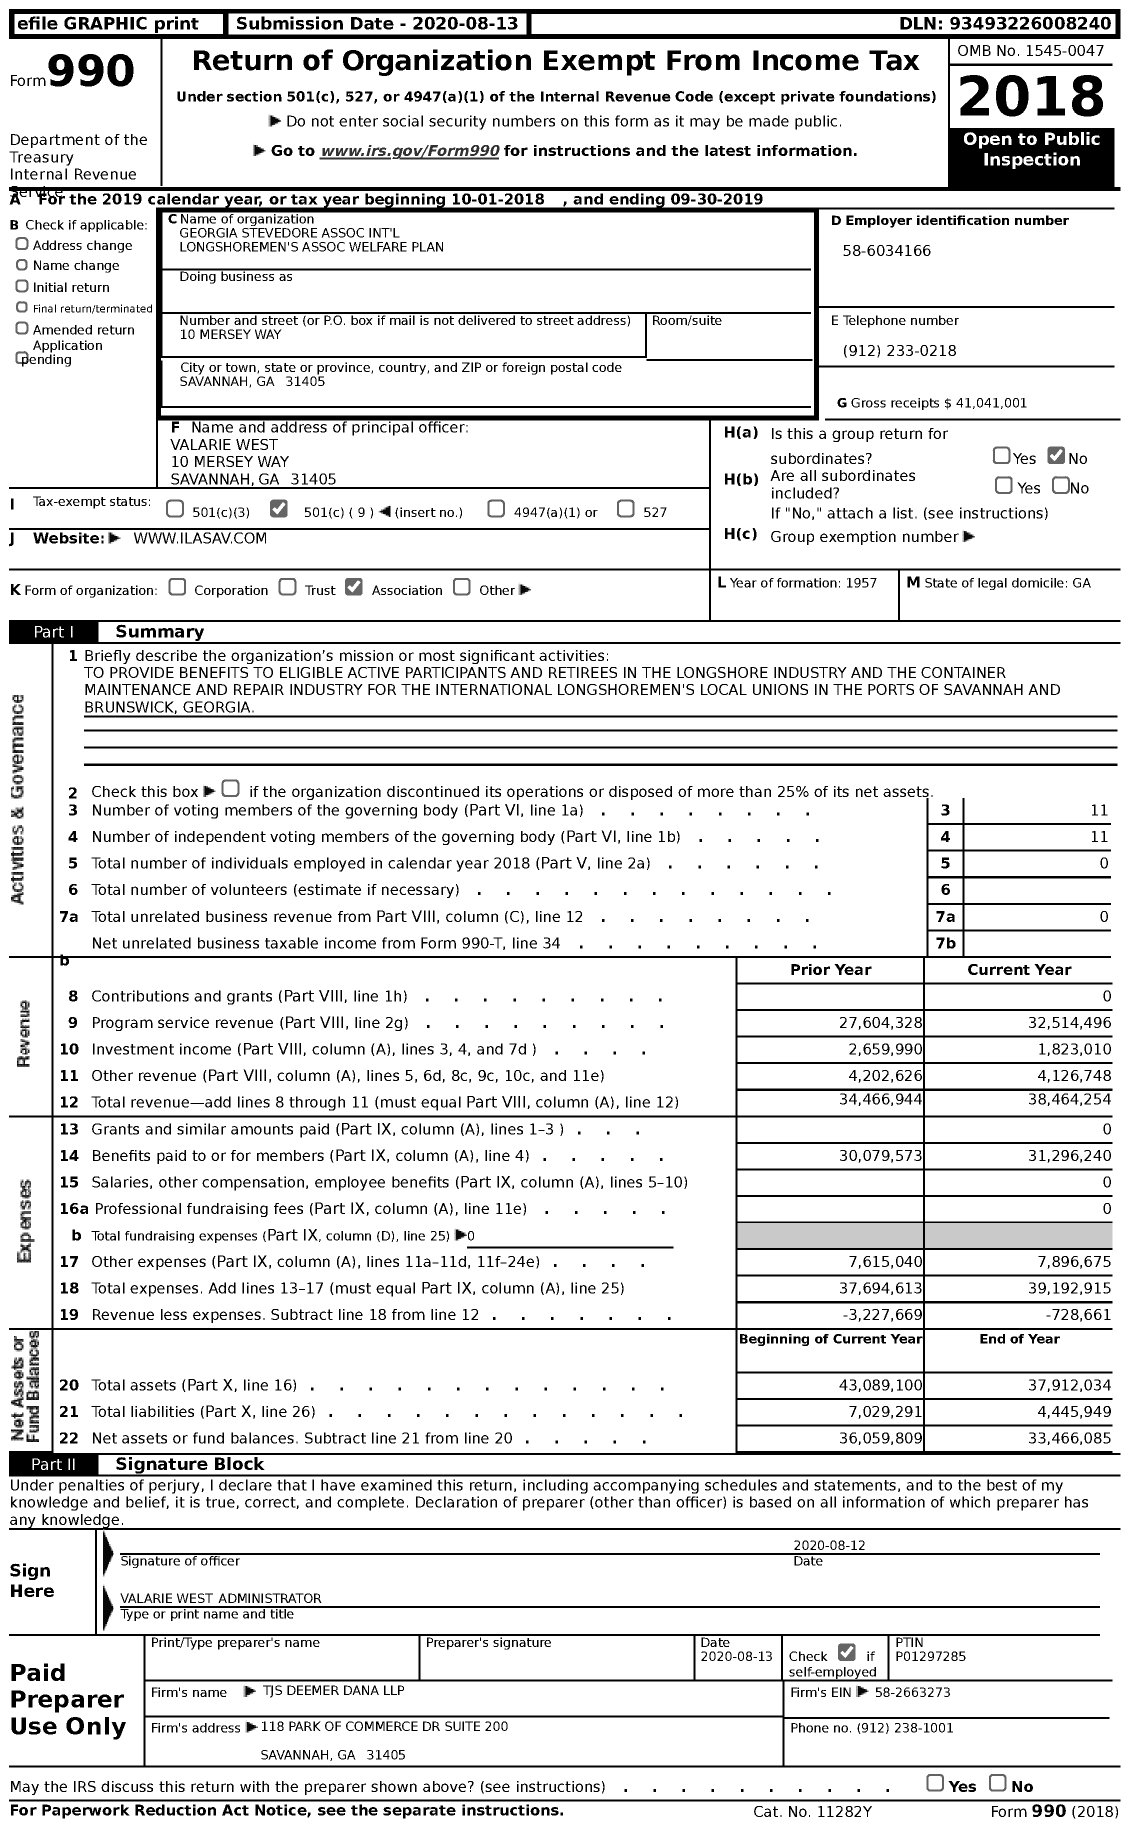 Image of first page of 2018 Form 990 for Georgia Stevedore Association International Longshoremen's Association Welfare Plan